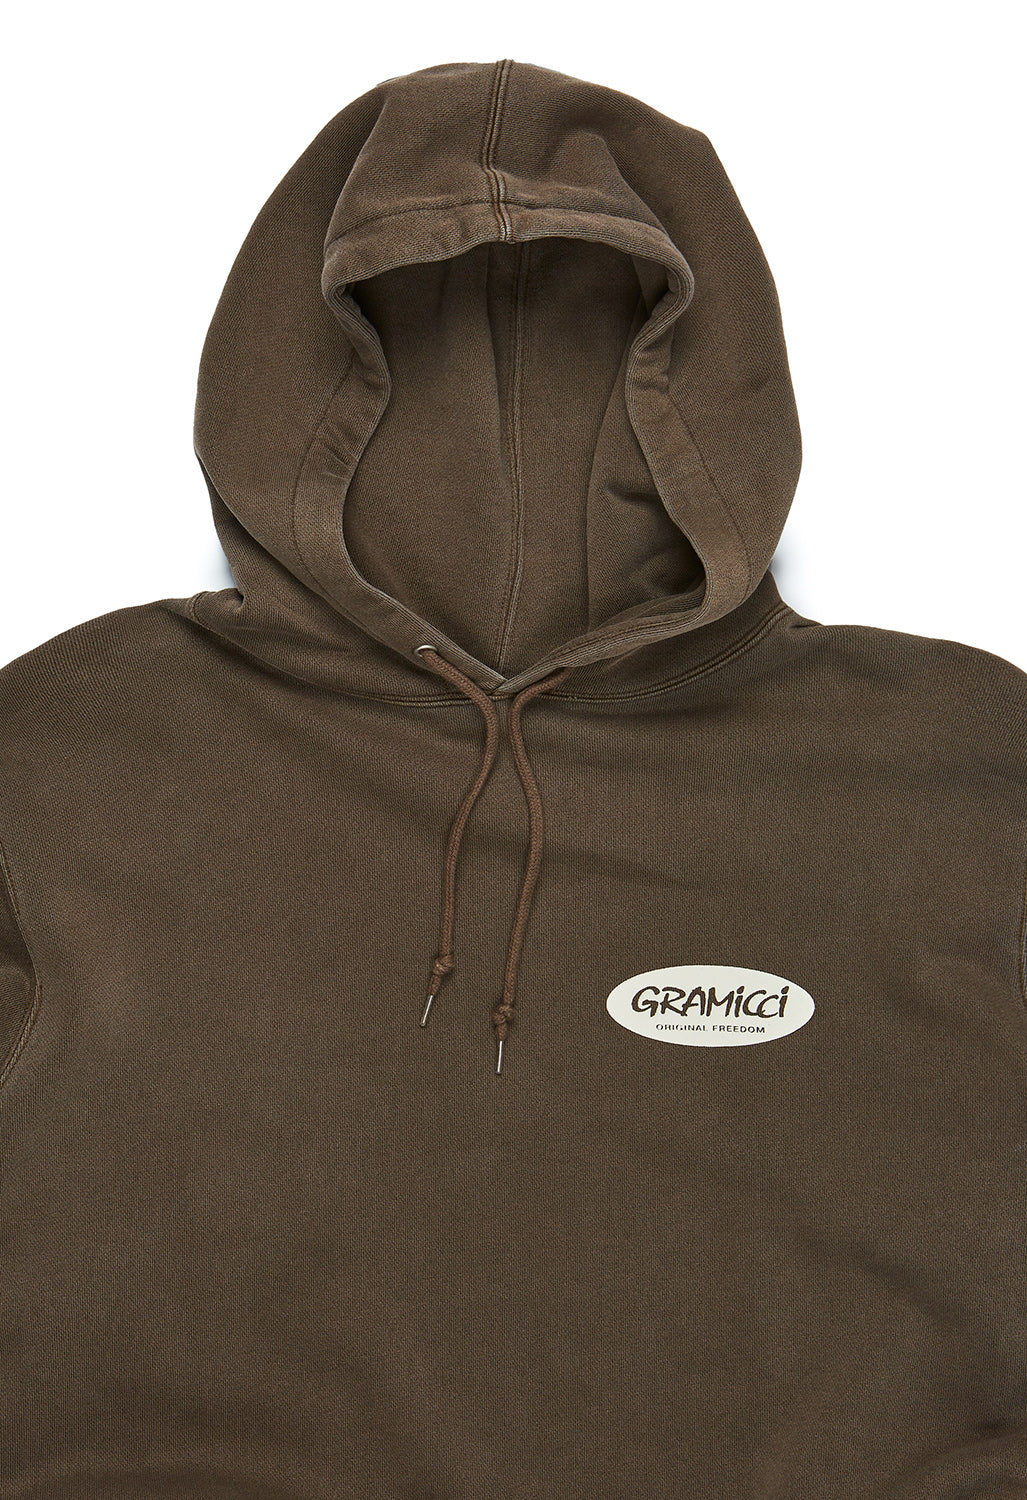 Gramicci Original Freedom Oval Hooded Sweatshirt - Brown Pigment